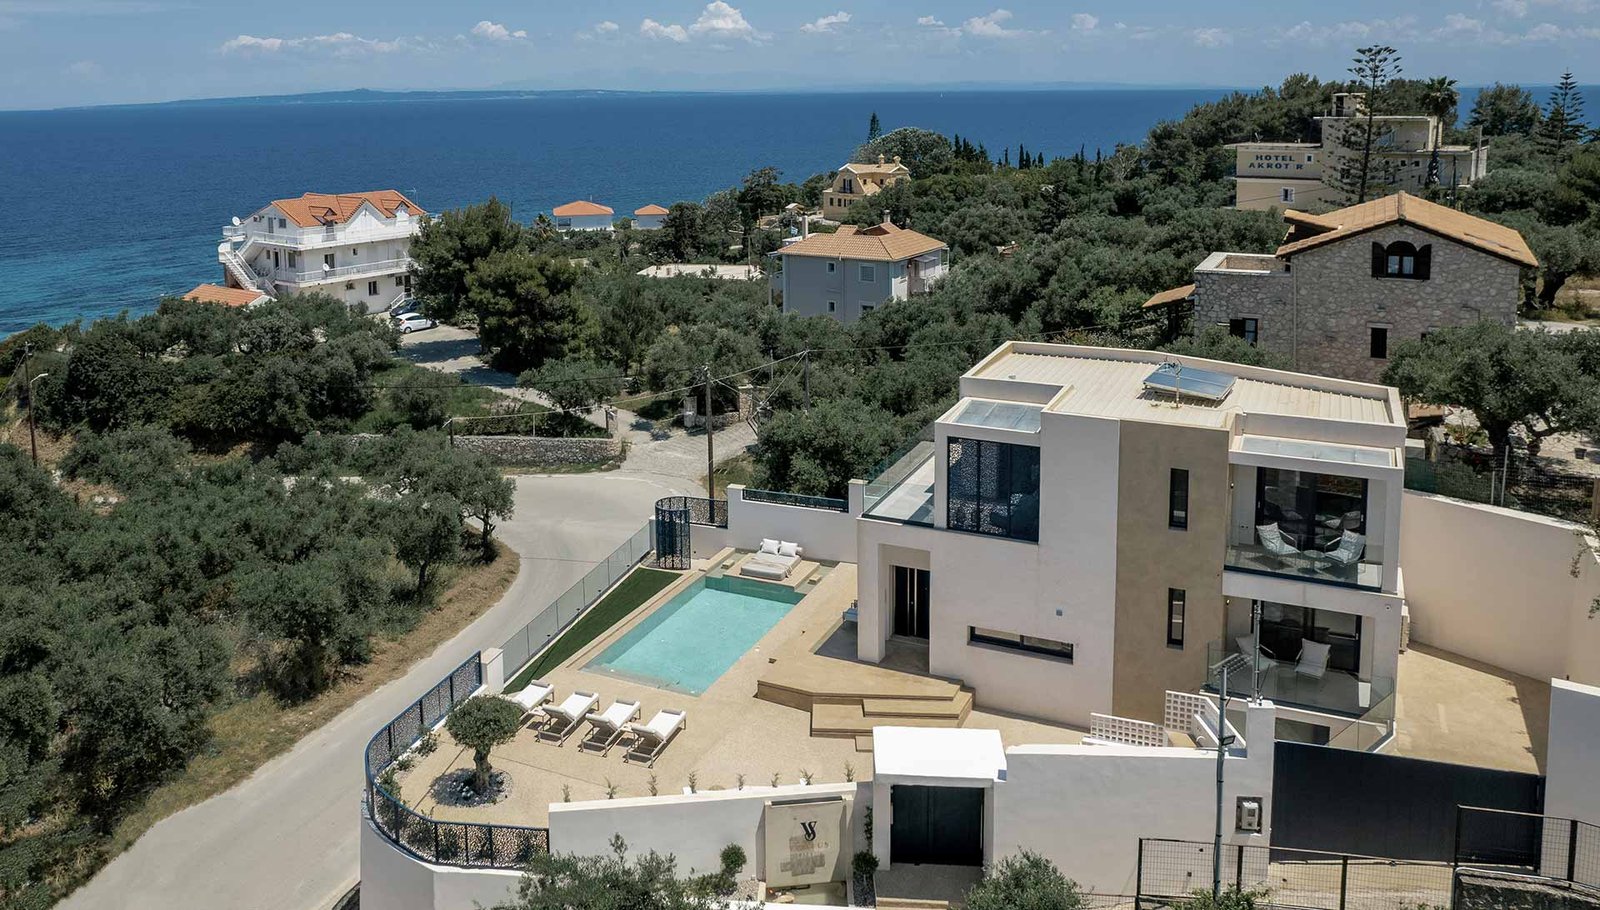 Ventus Villa is a luxurious private property in Akrotiri Zakynthos